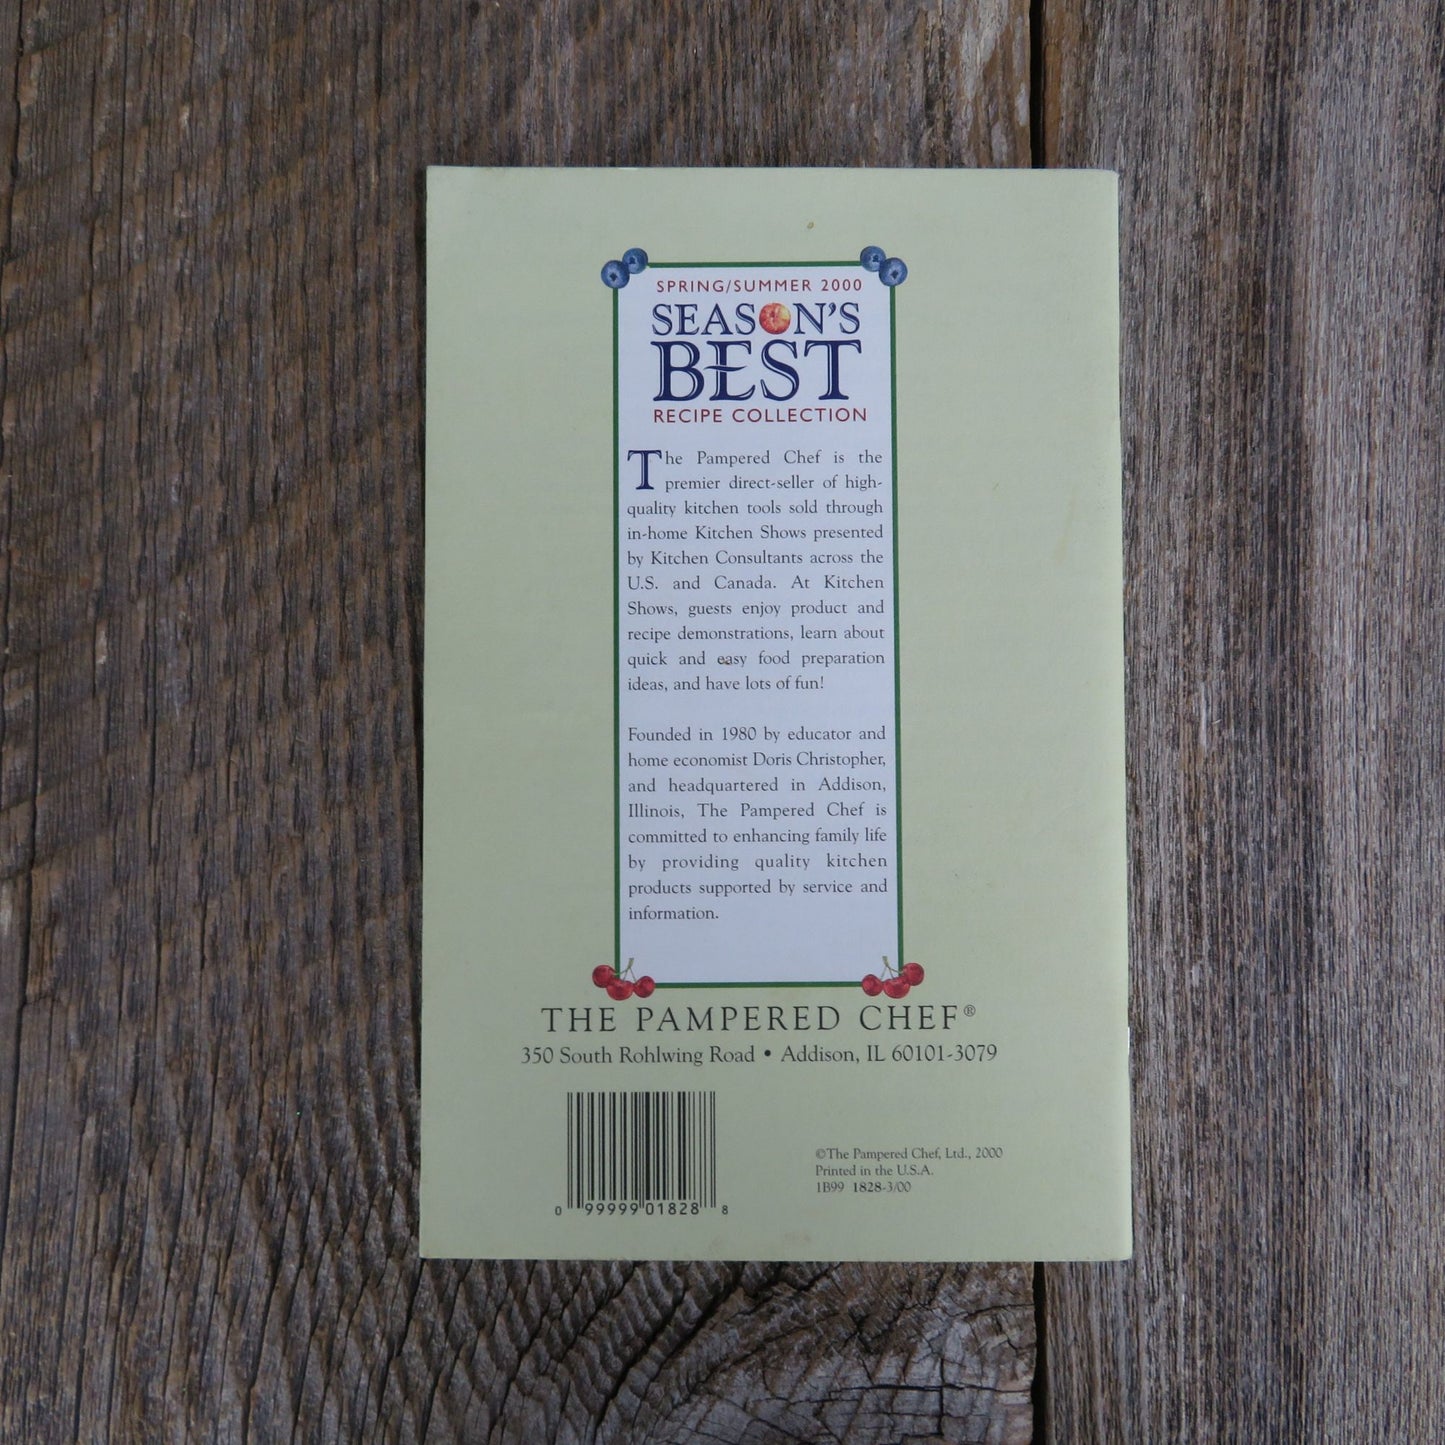 Season's Best Booklet Pampered Chef Cookbook Pamphlet Spring Summer Recipes 2000 Promo